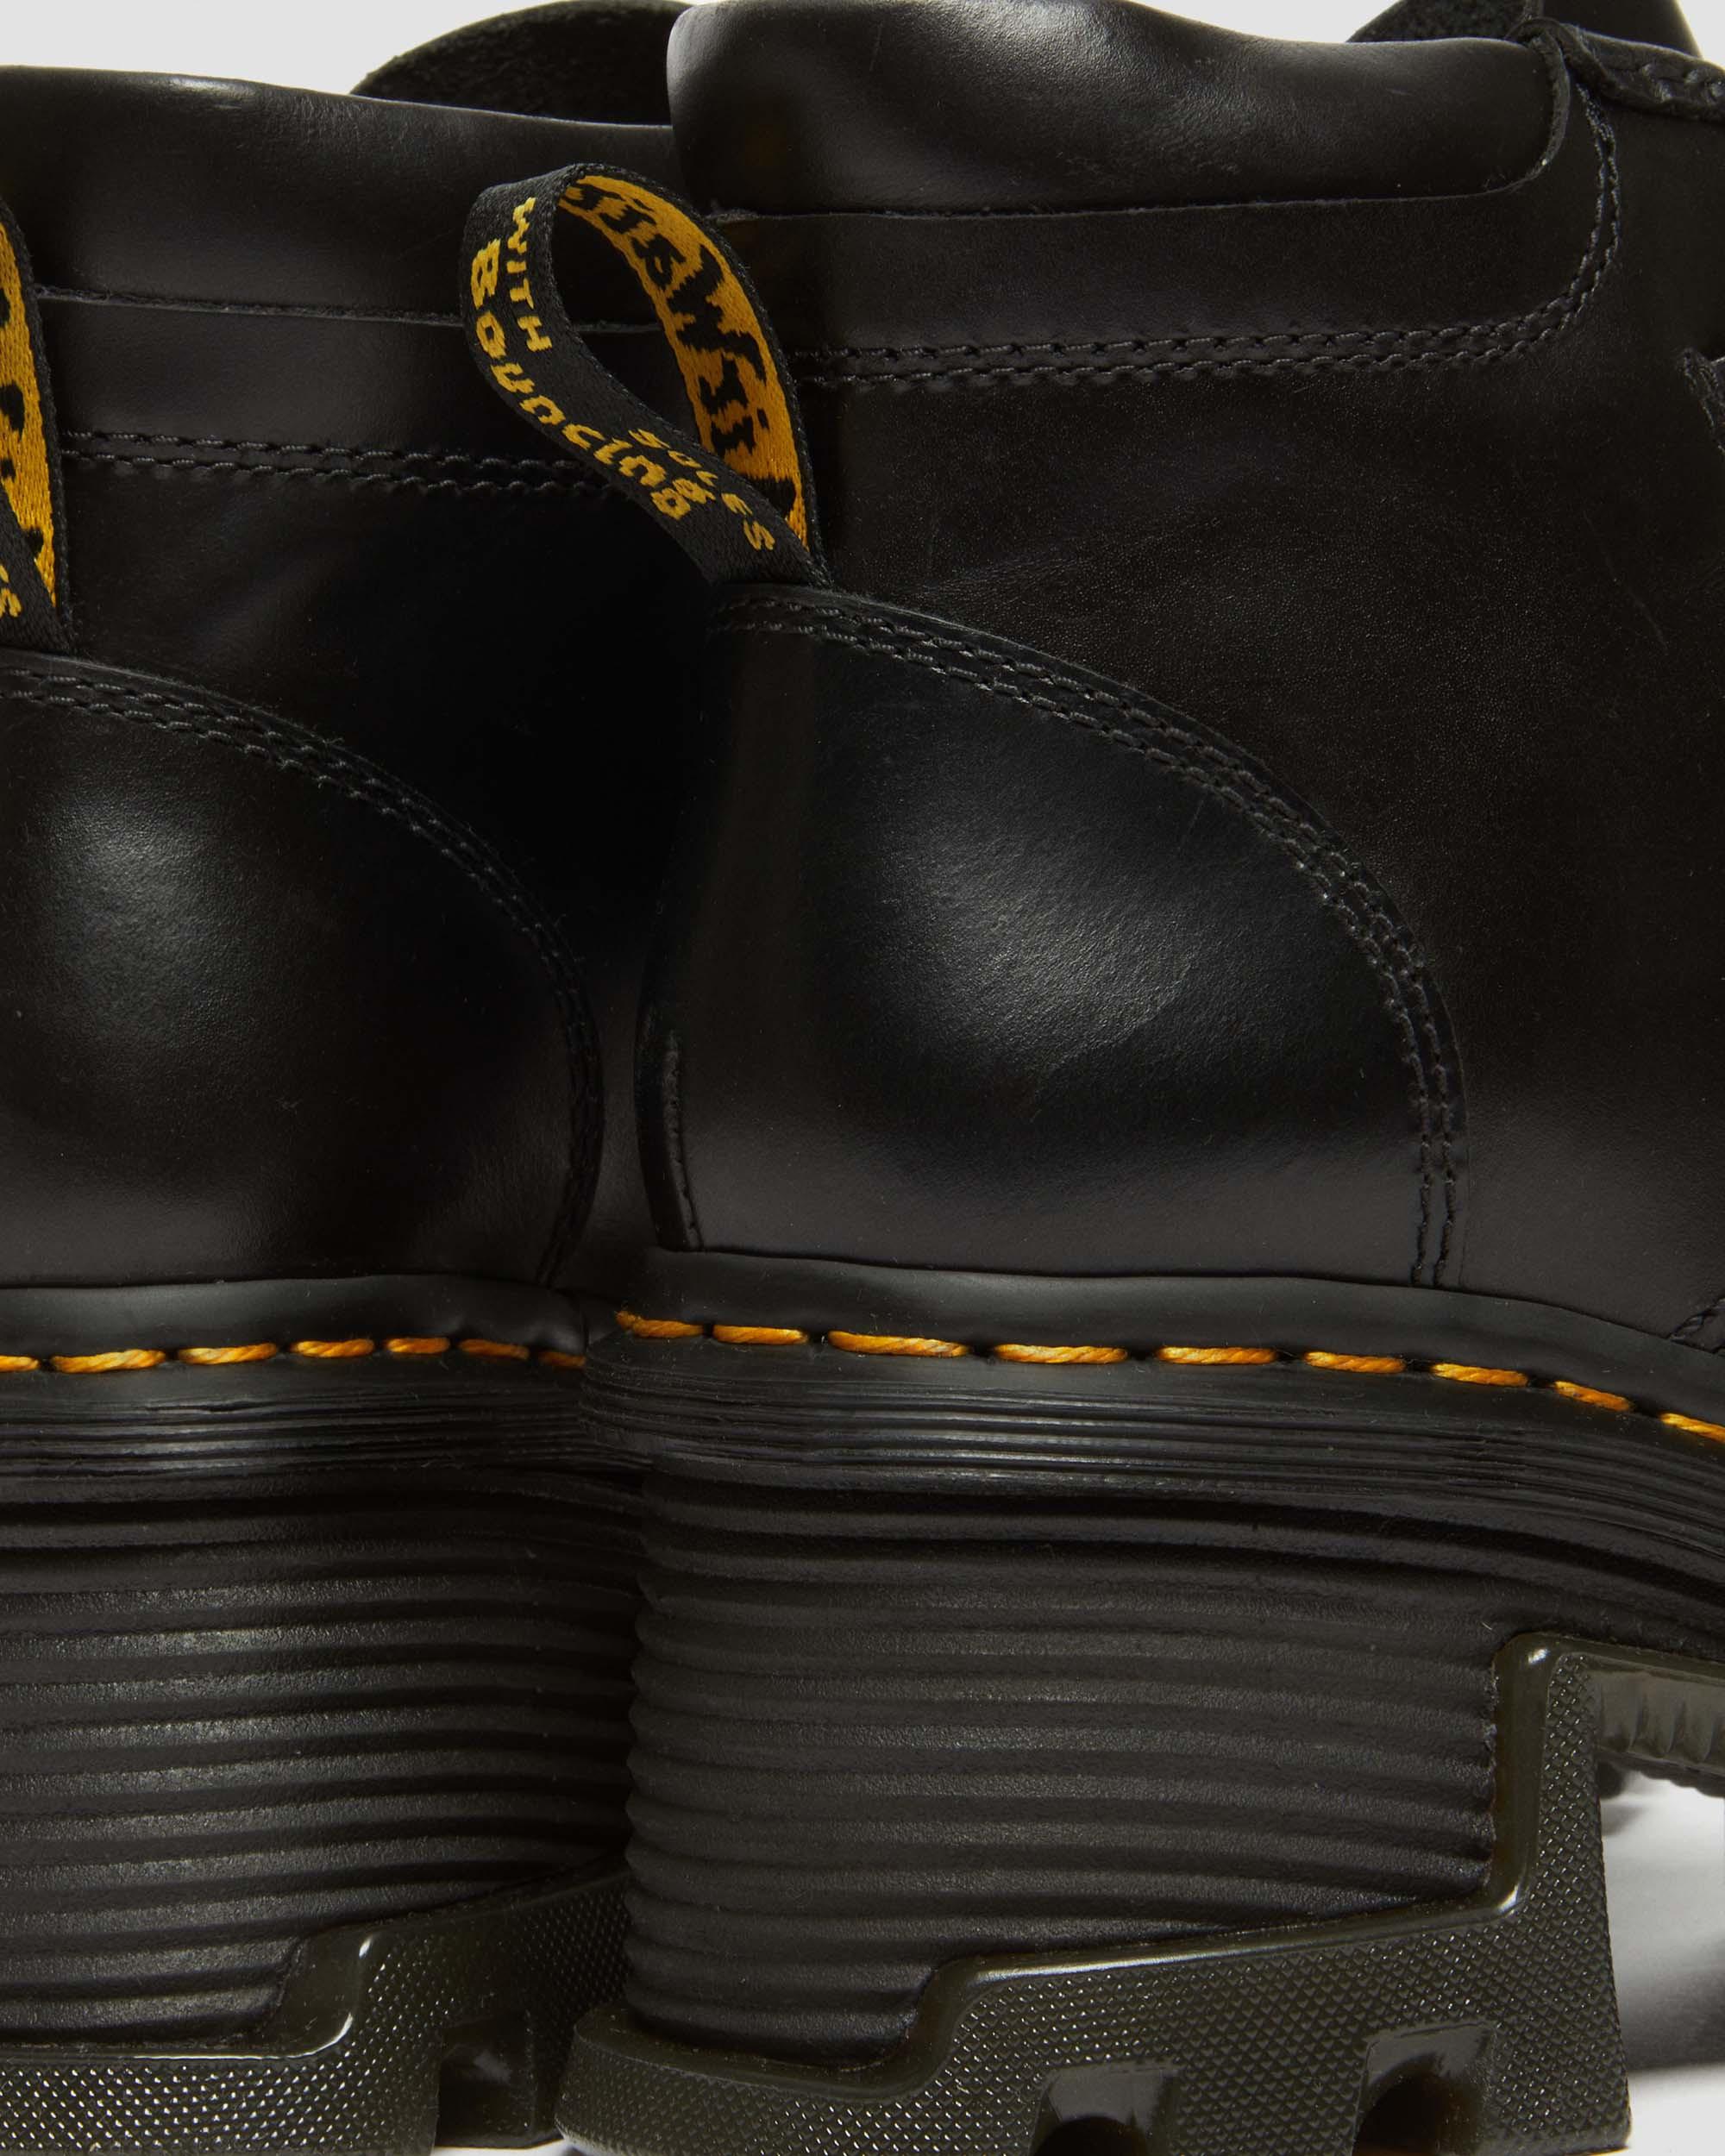 Corran 3-Eye Atlas Leather Heeled Boots in Black